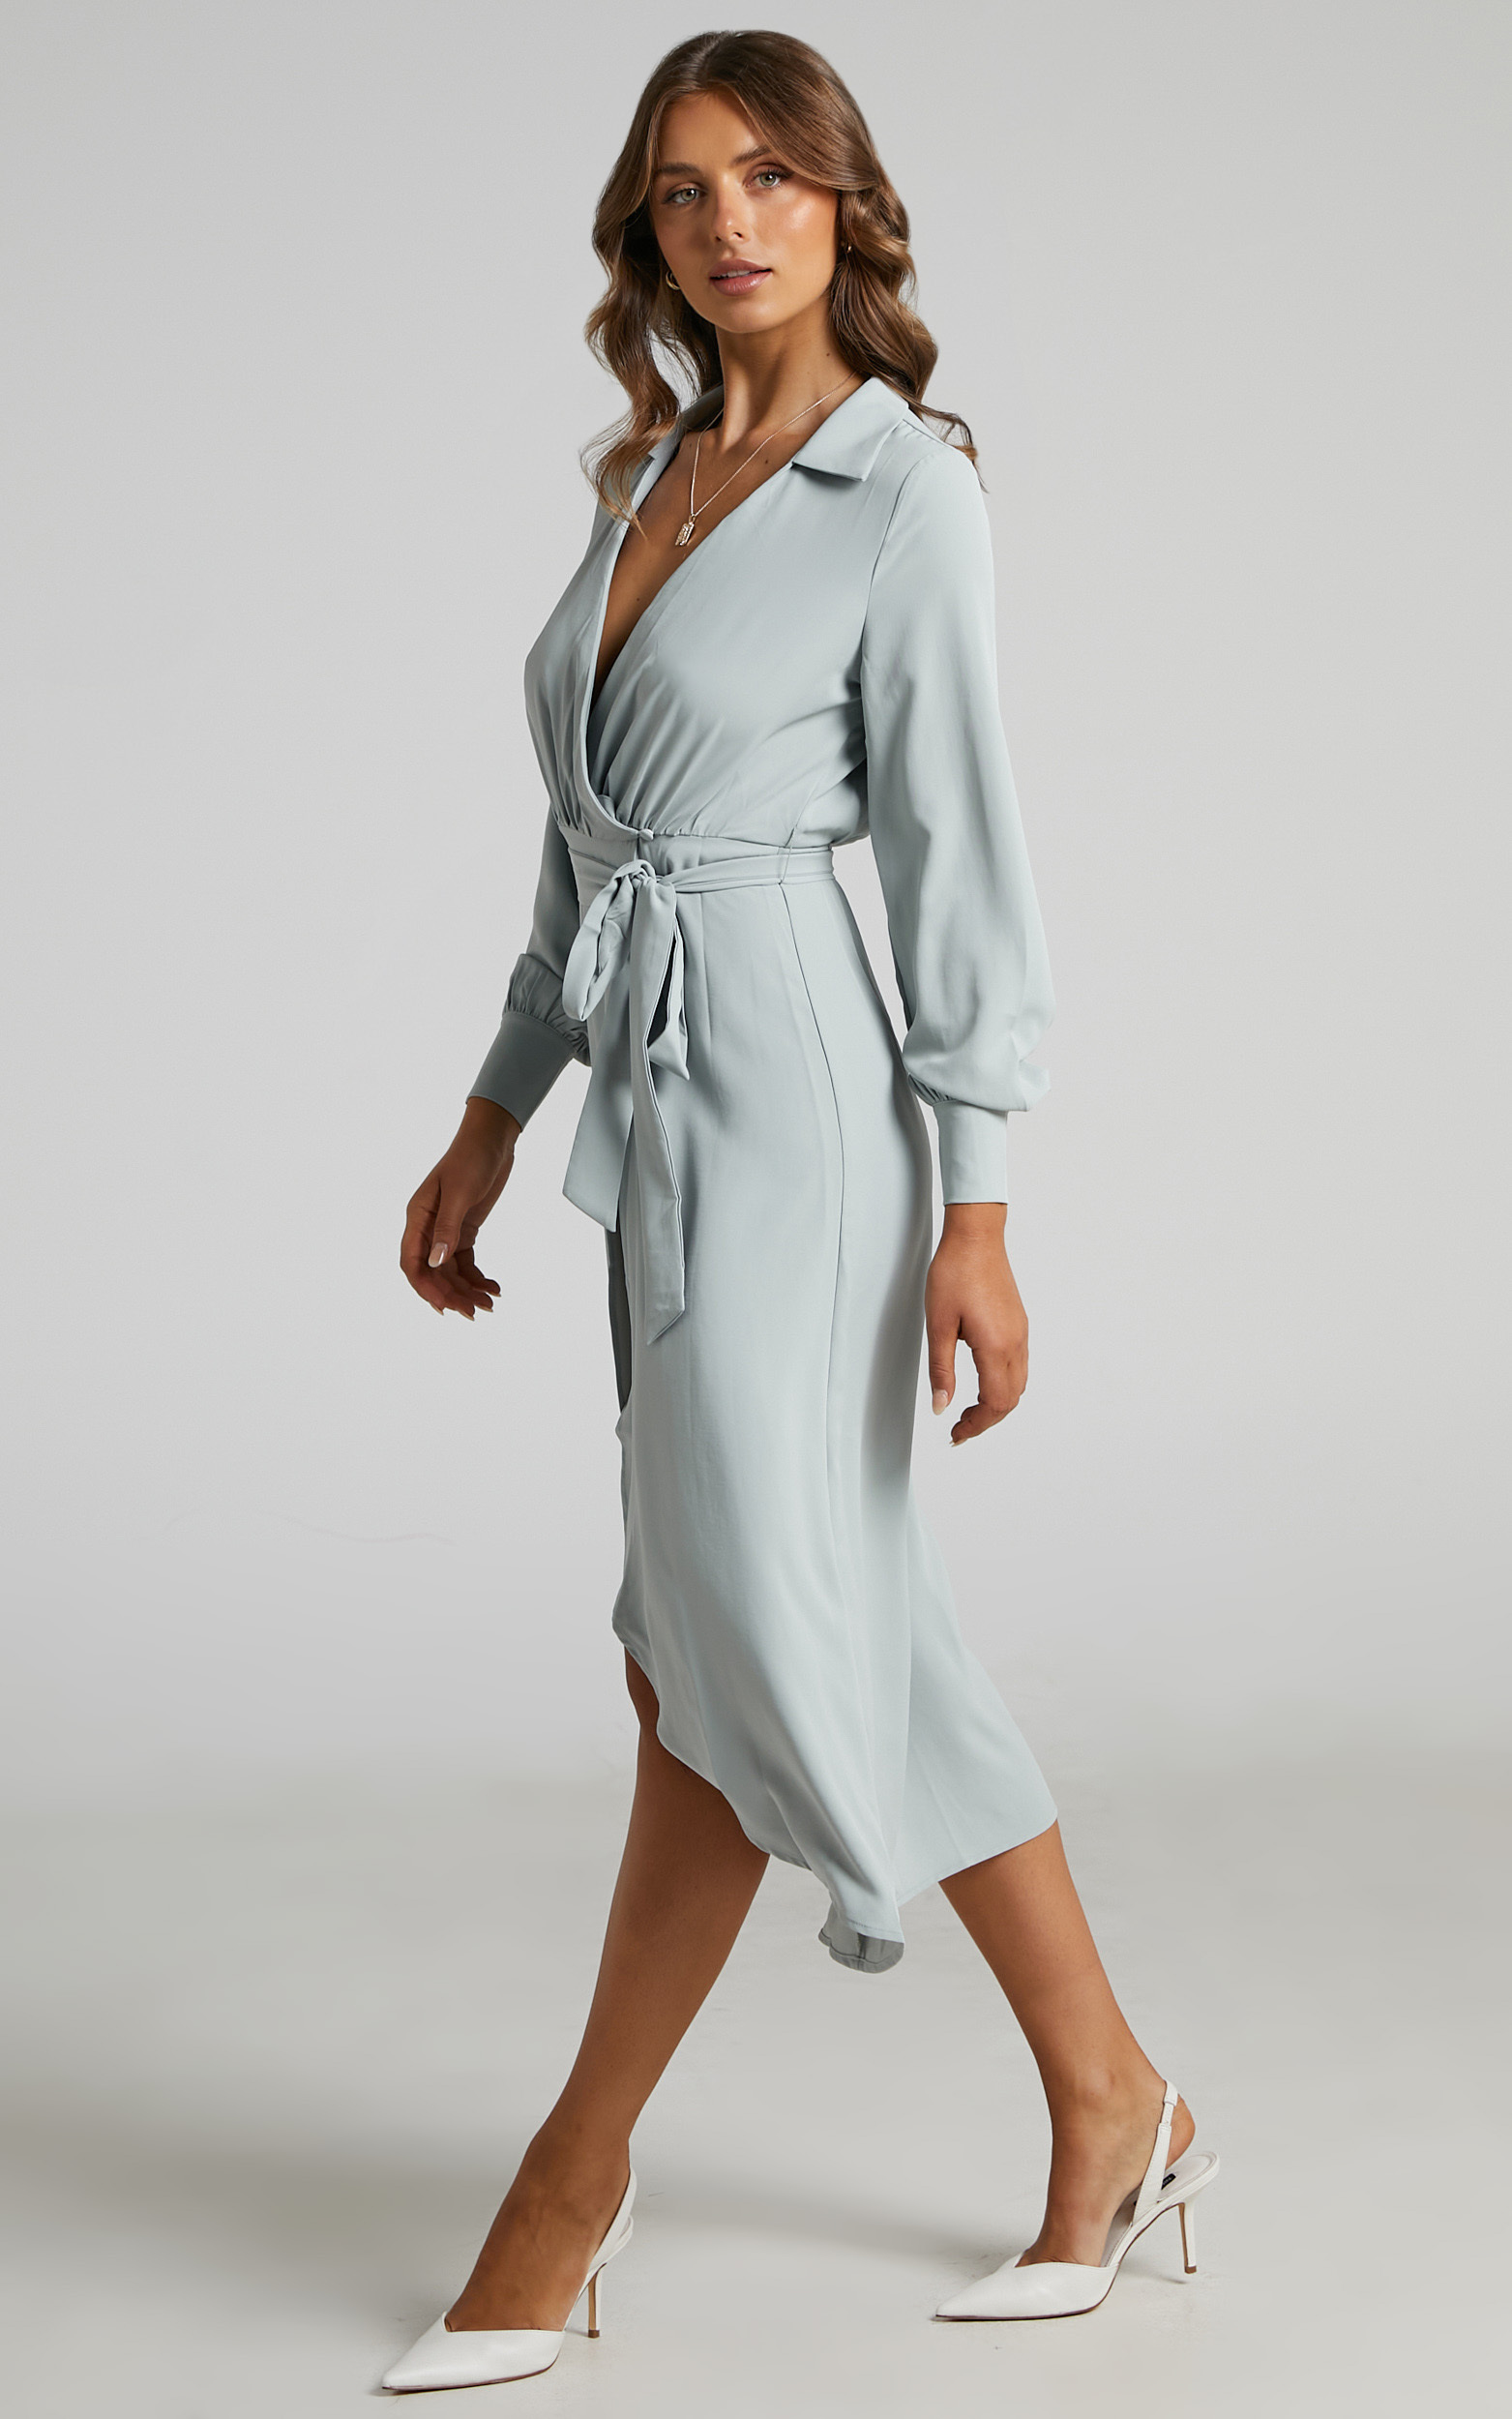 Nalysha Long Sleeve Wrap Midi Dress in Dusty Blue - 04, GRN1, hi-res image number null